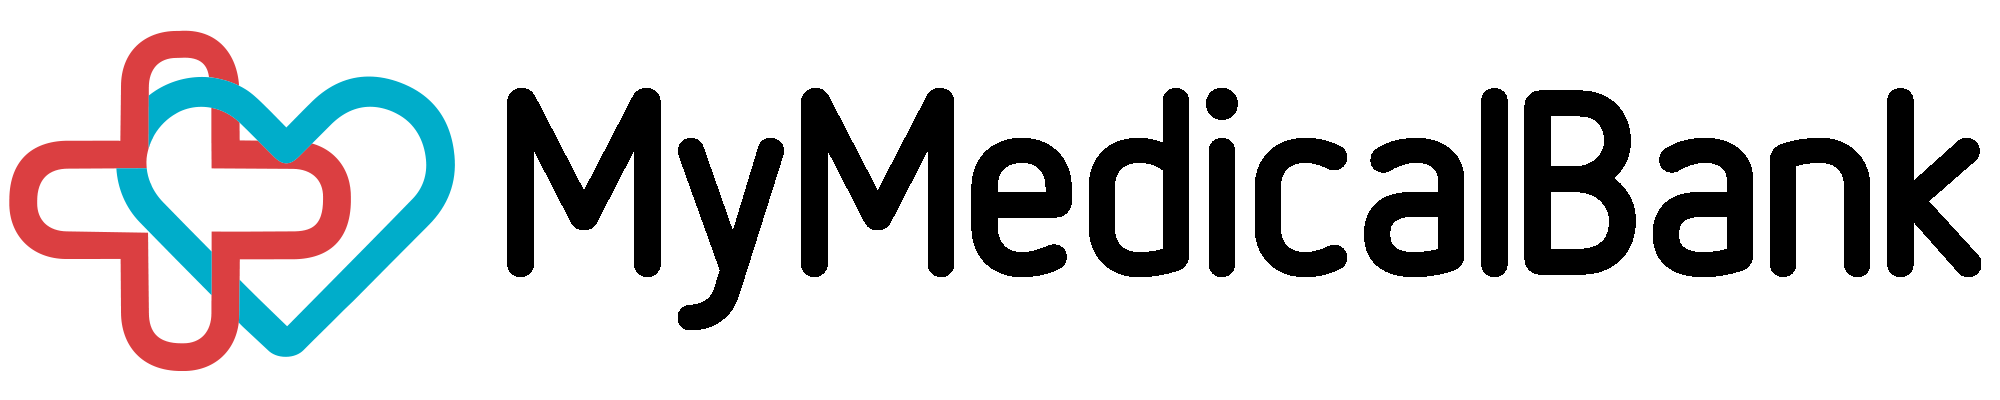 mmb-logo